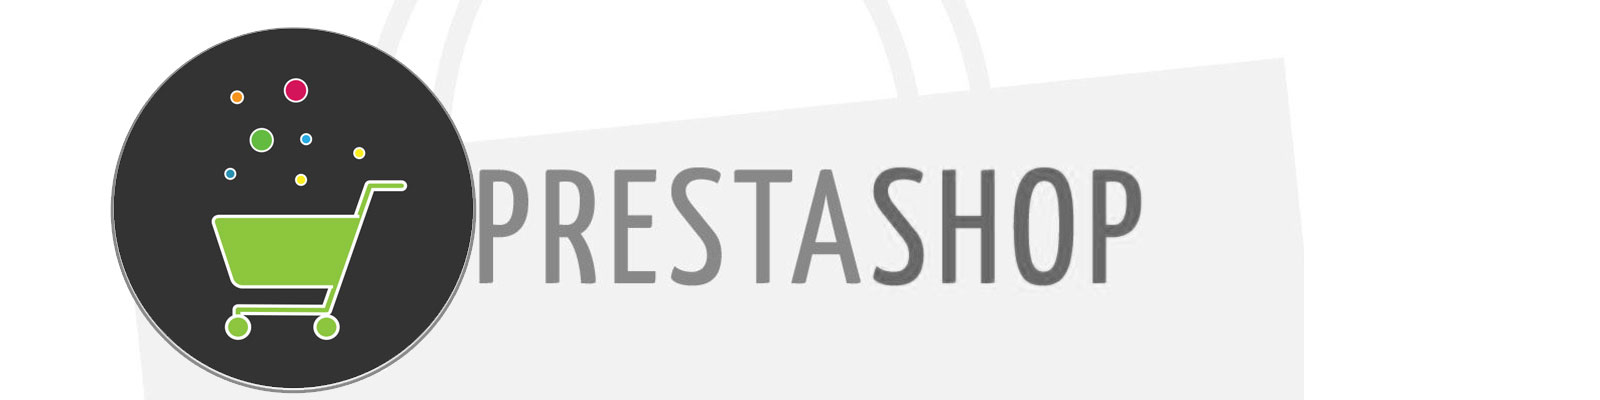 prestashop website development